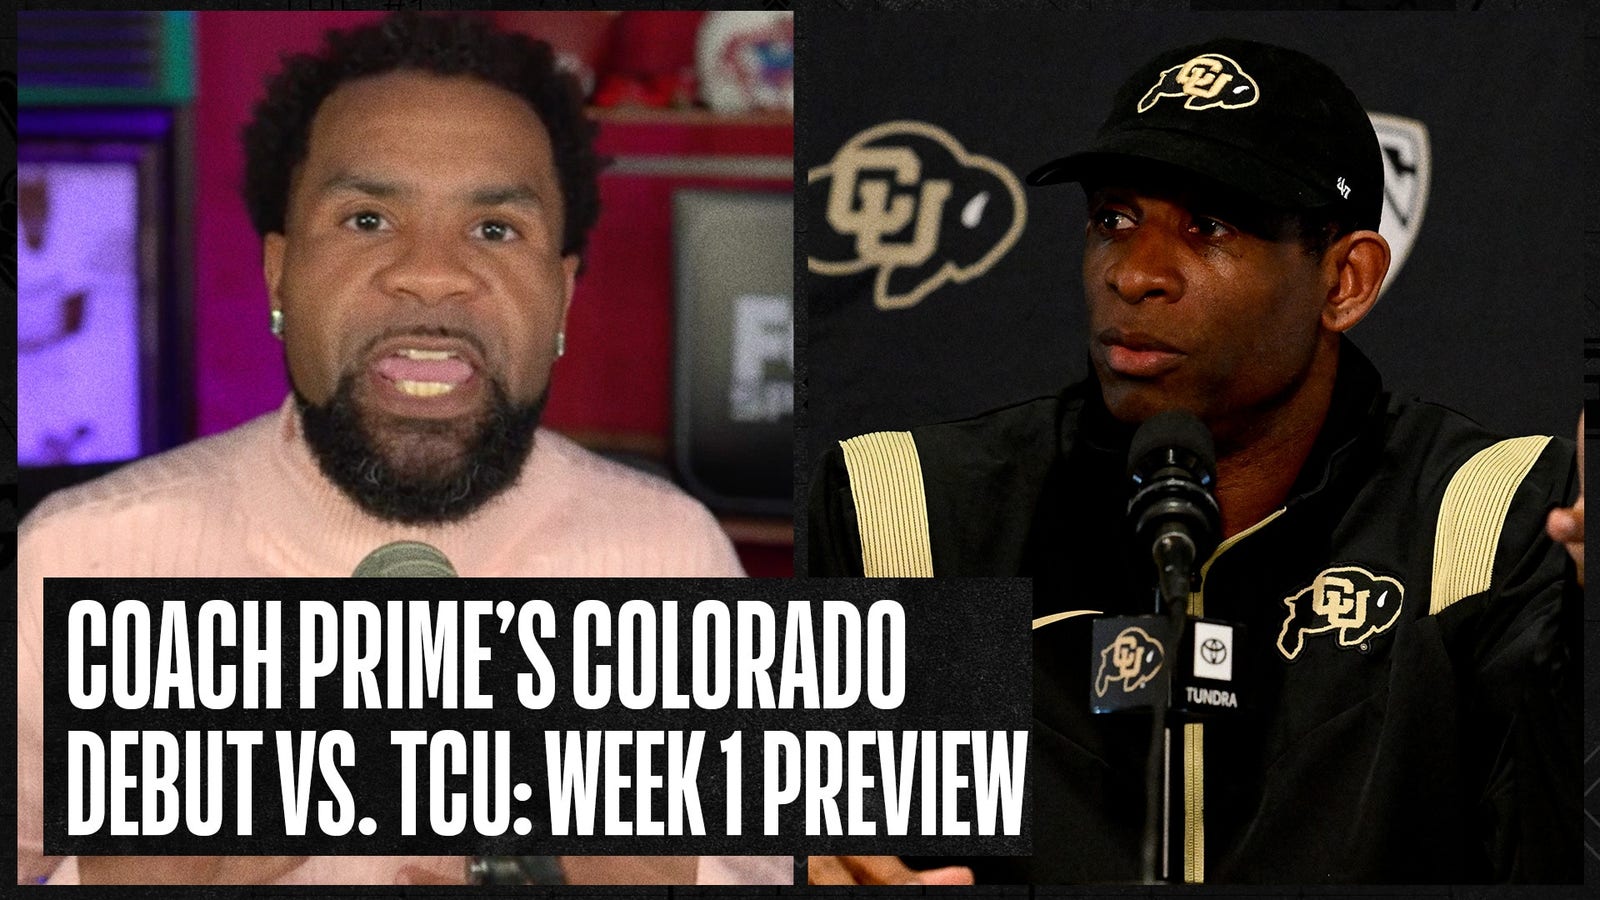 Week 1 preview: Coach Prime's Colorado debut vs. TCU, more